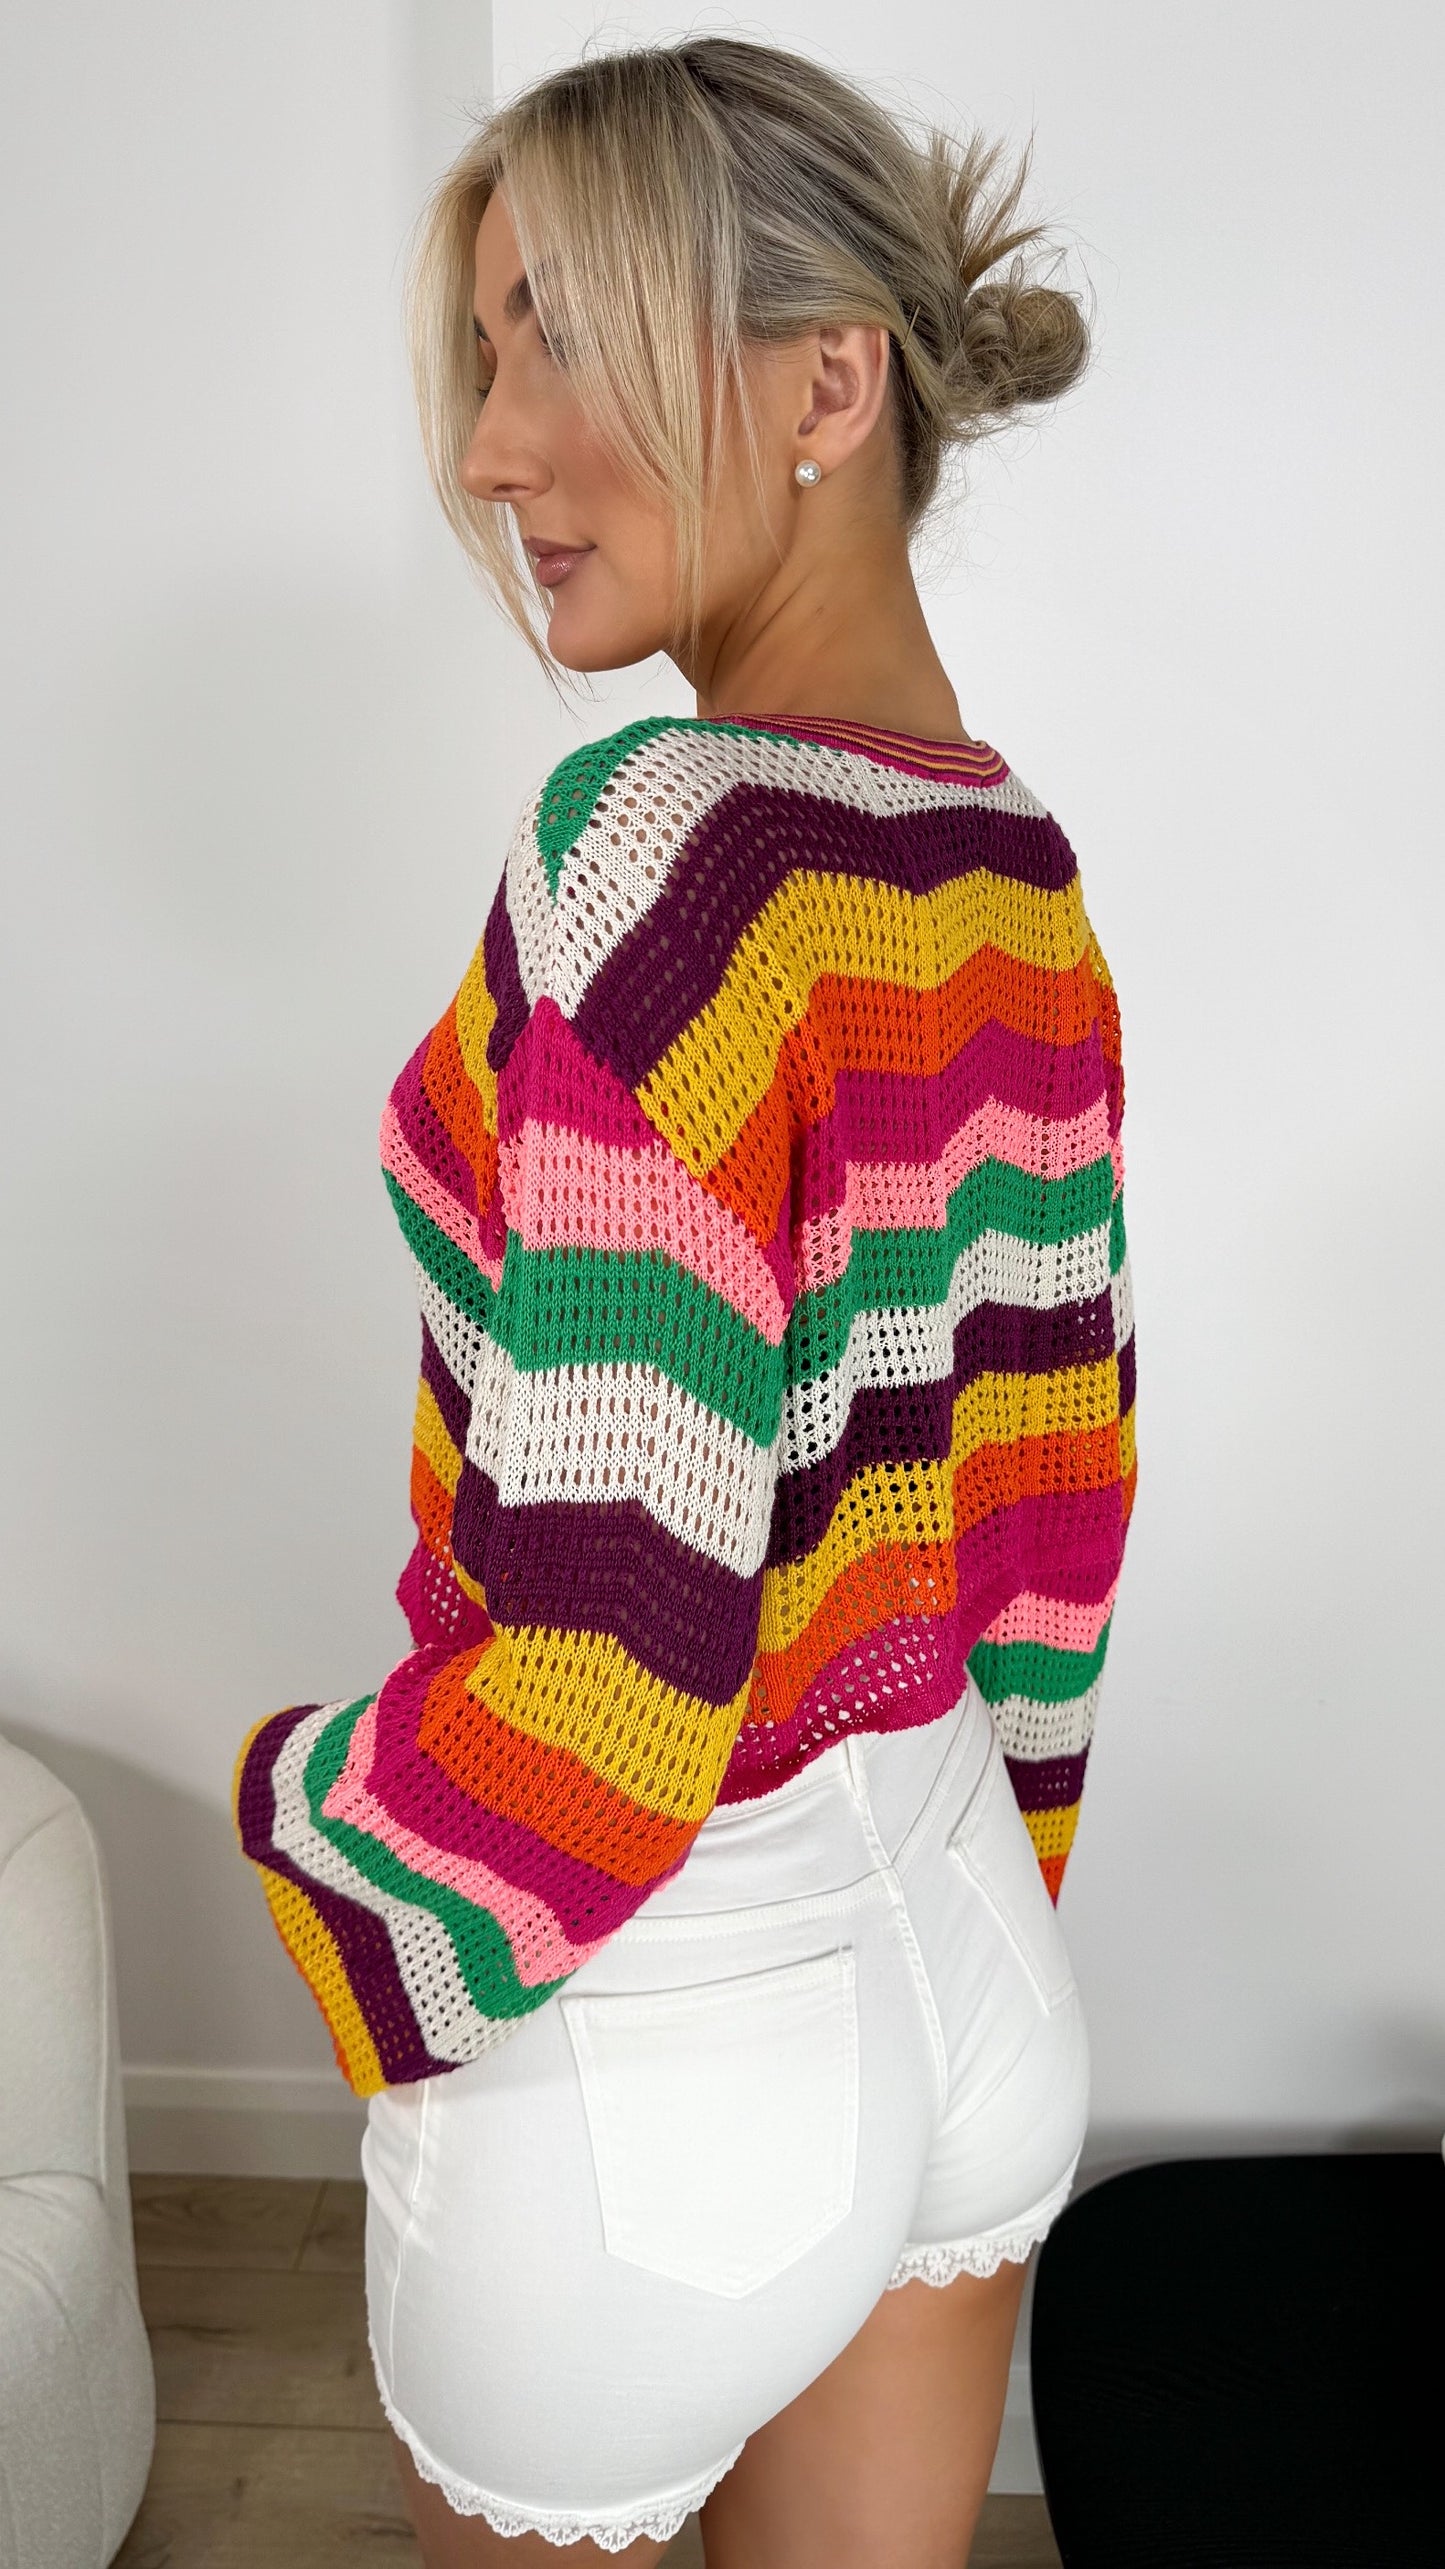 Amadea White Denim Shorts with Crochet Belt